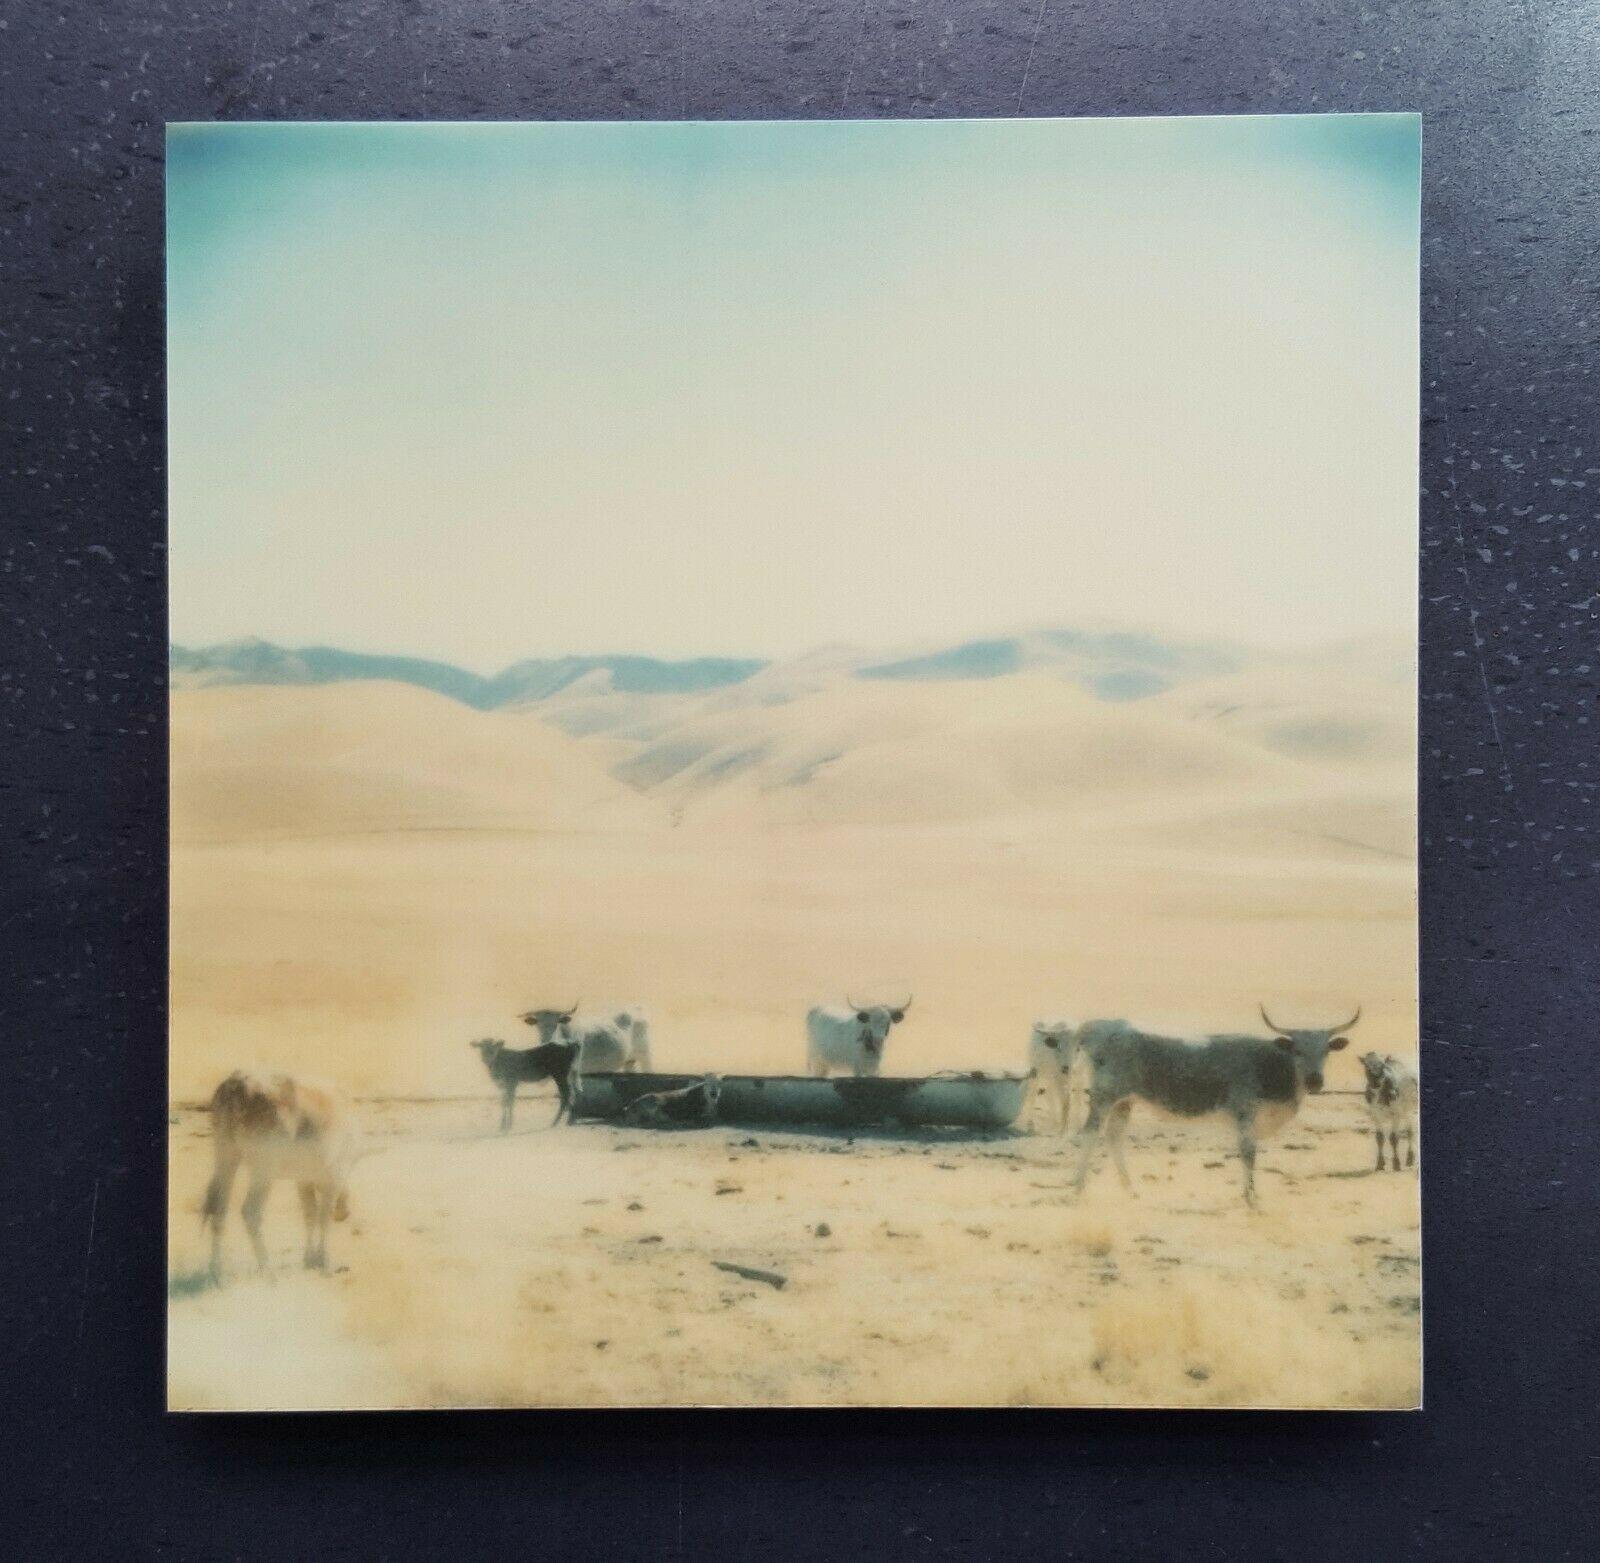 Oilfields, diptych - mounted - Polaroid, Contemporary, Portrait, Landscape 1